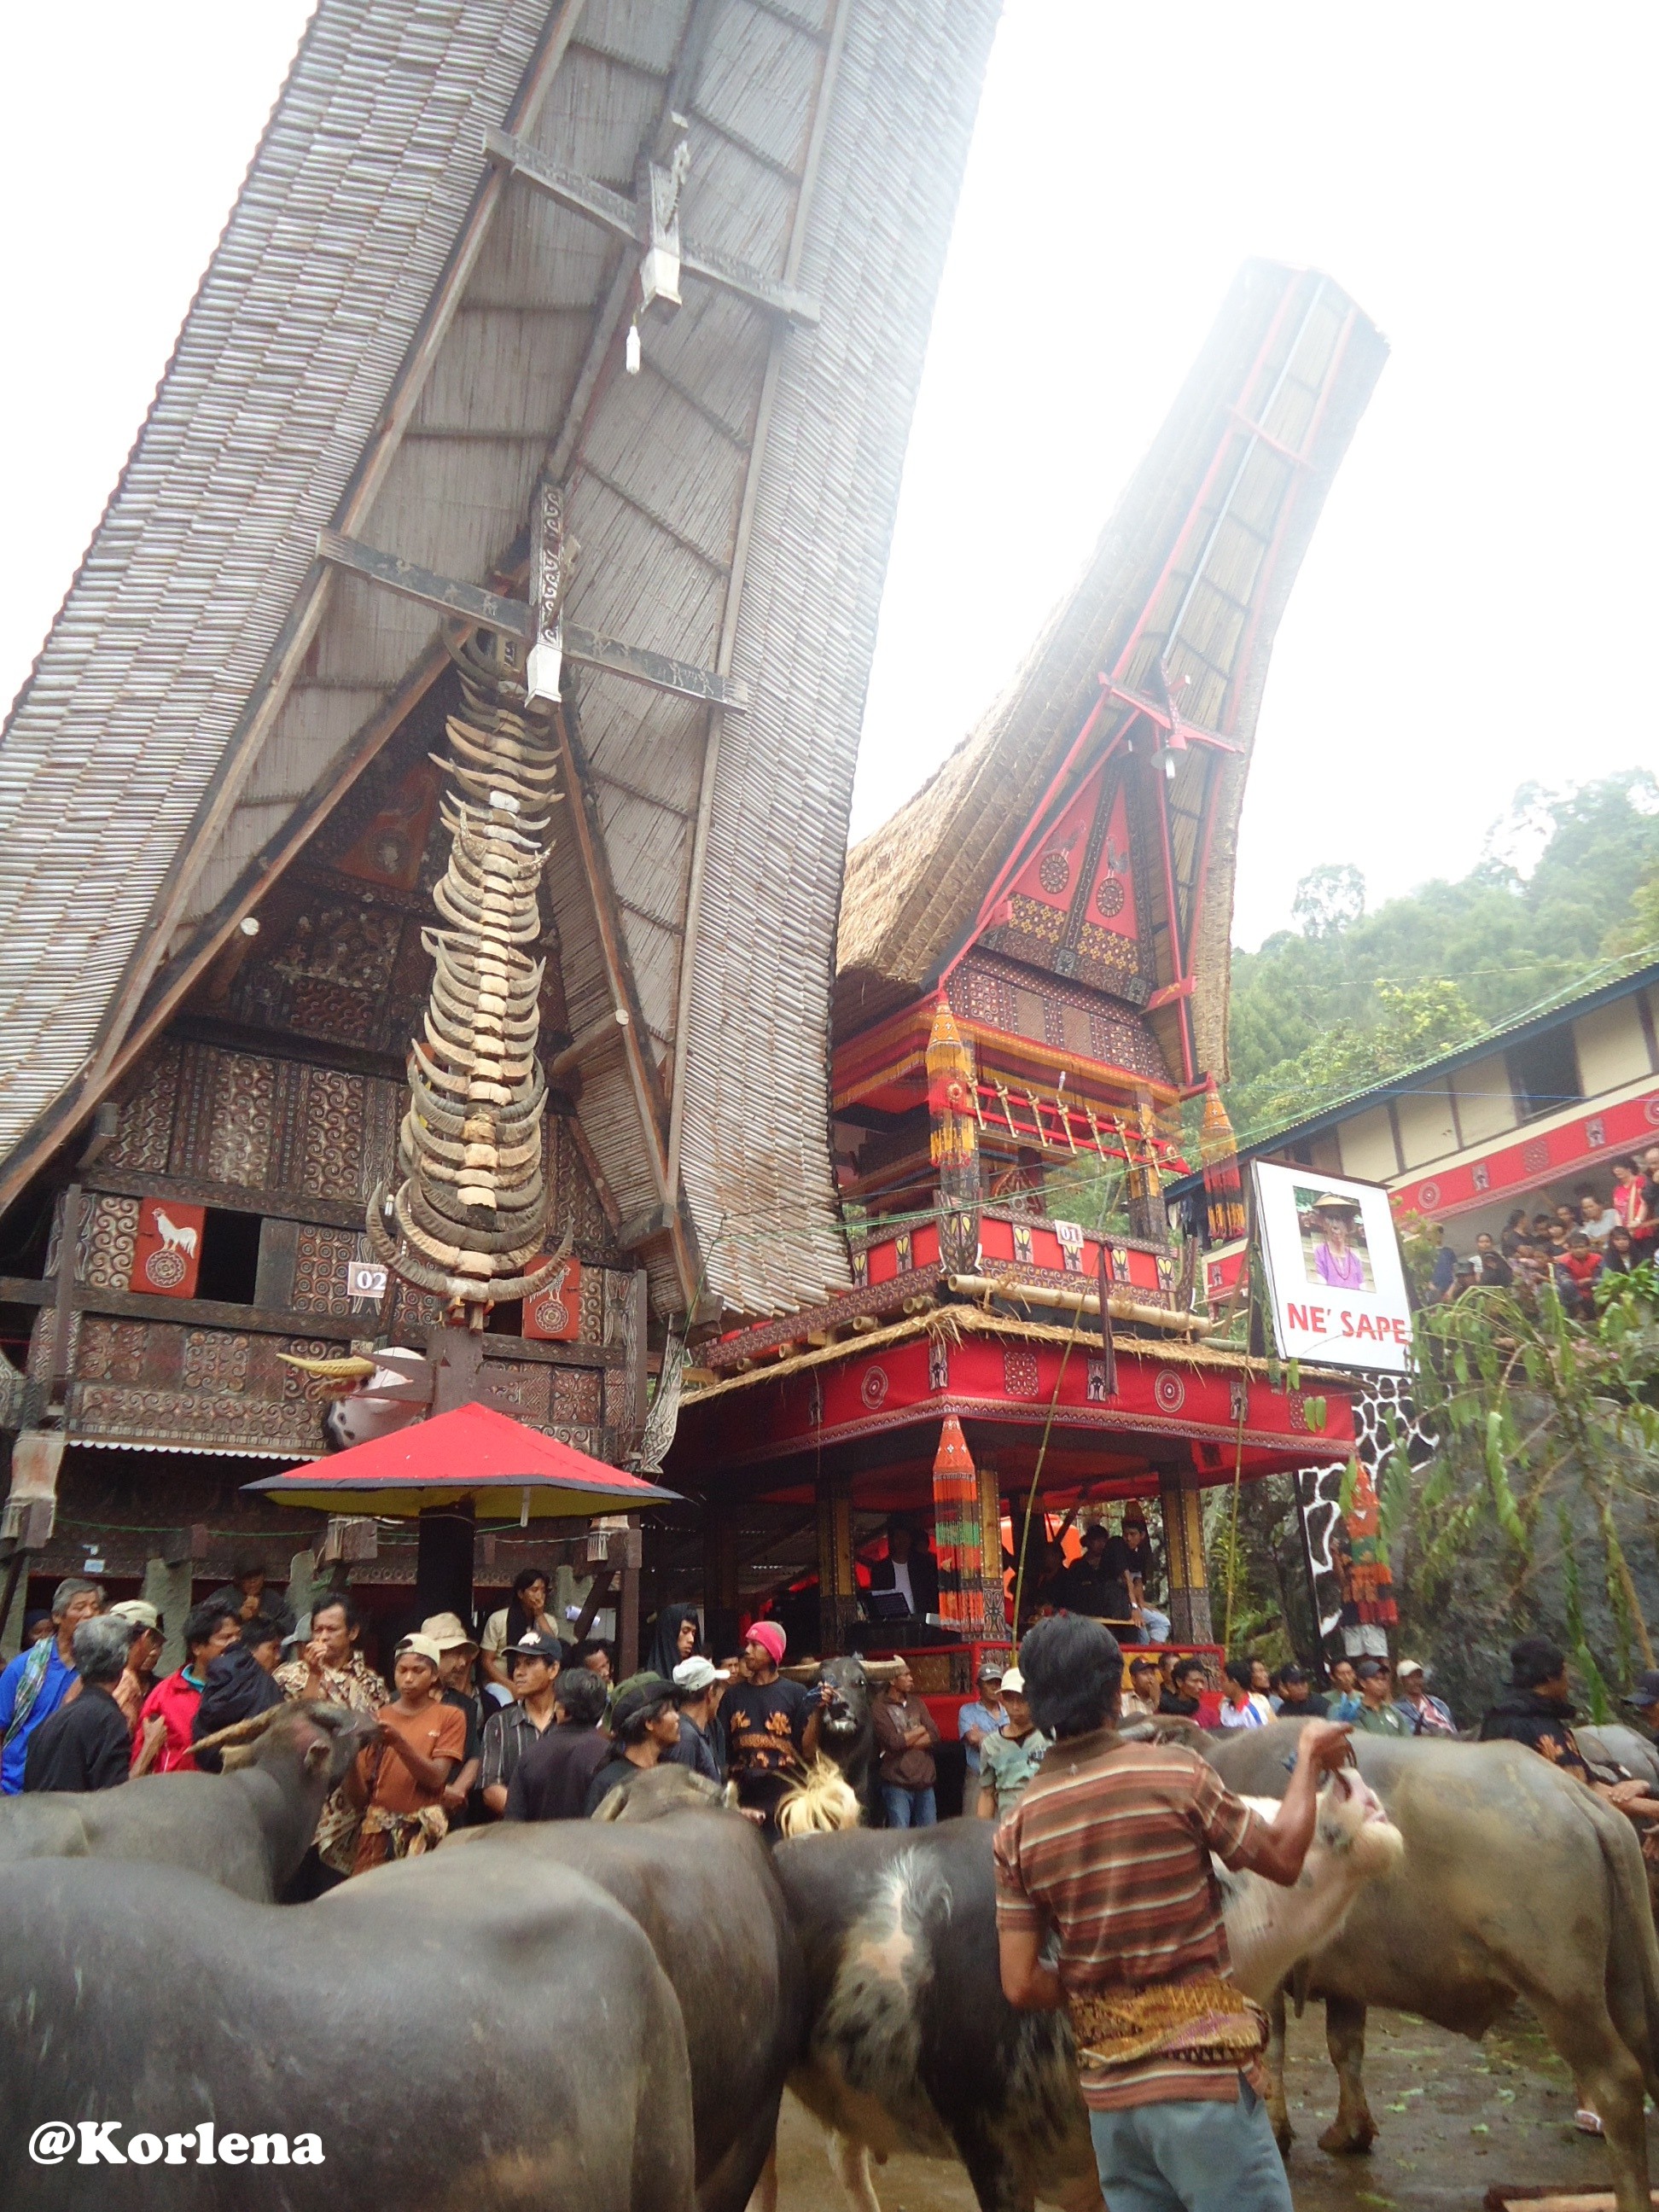 Download this Upacara Rambu Solo Tana Toraja picture